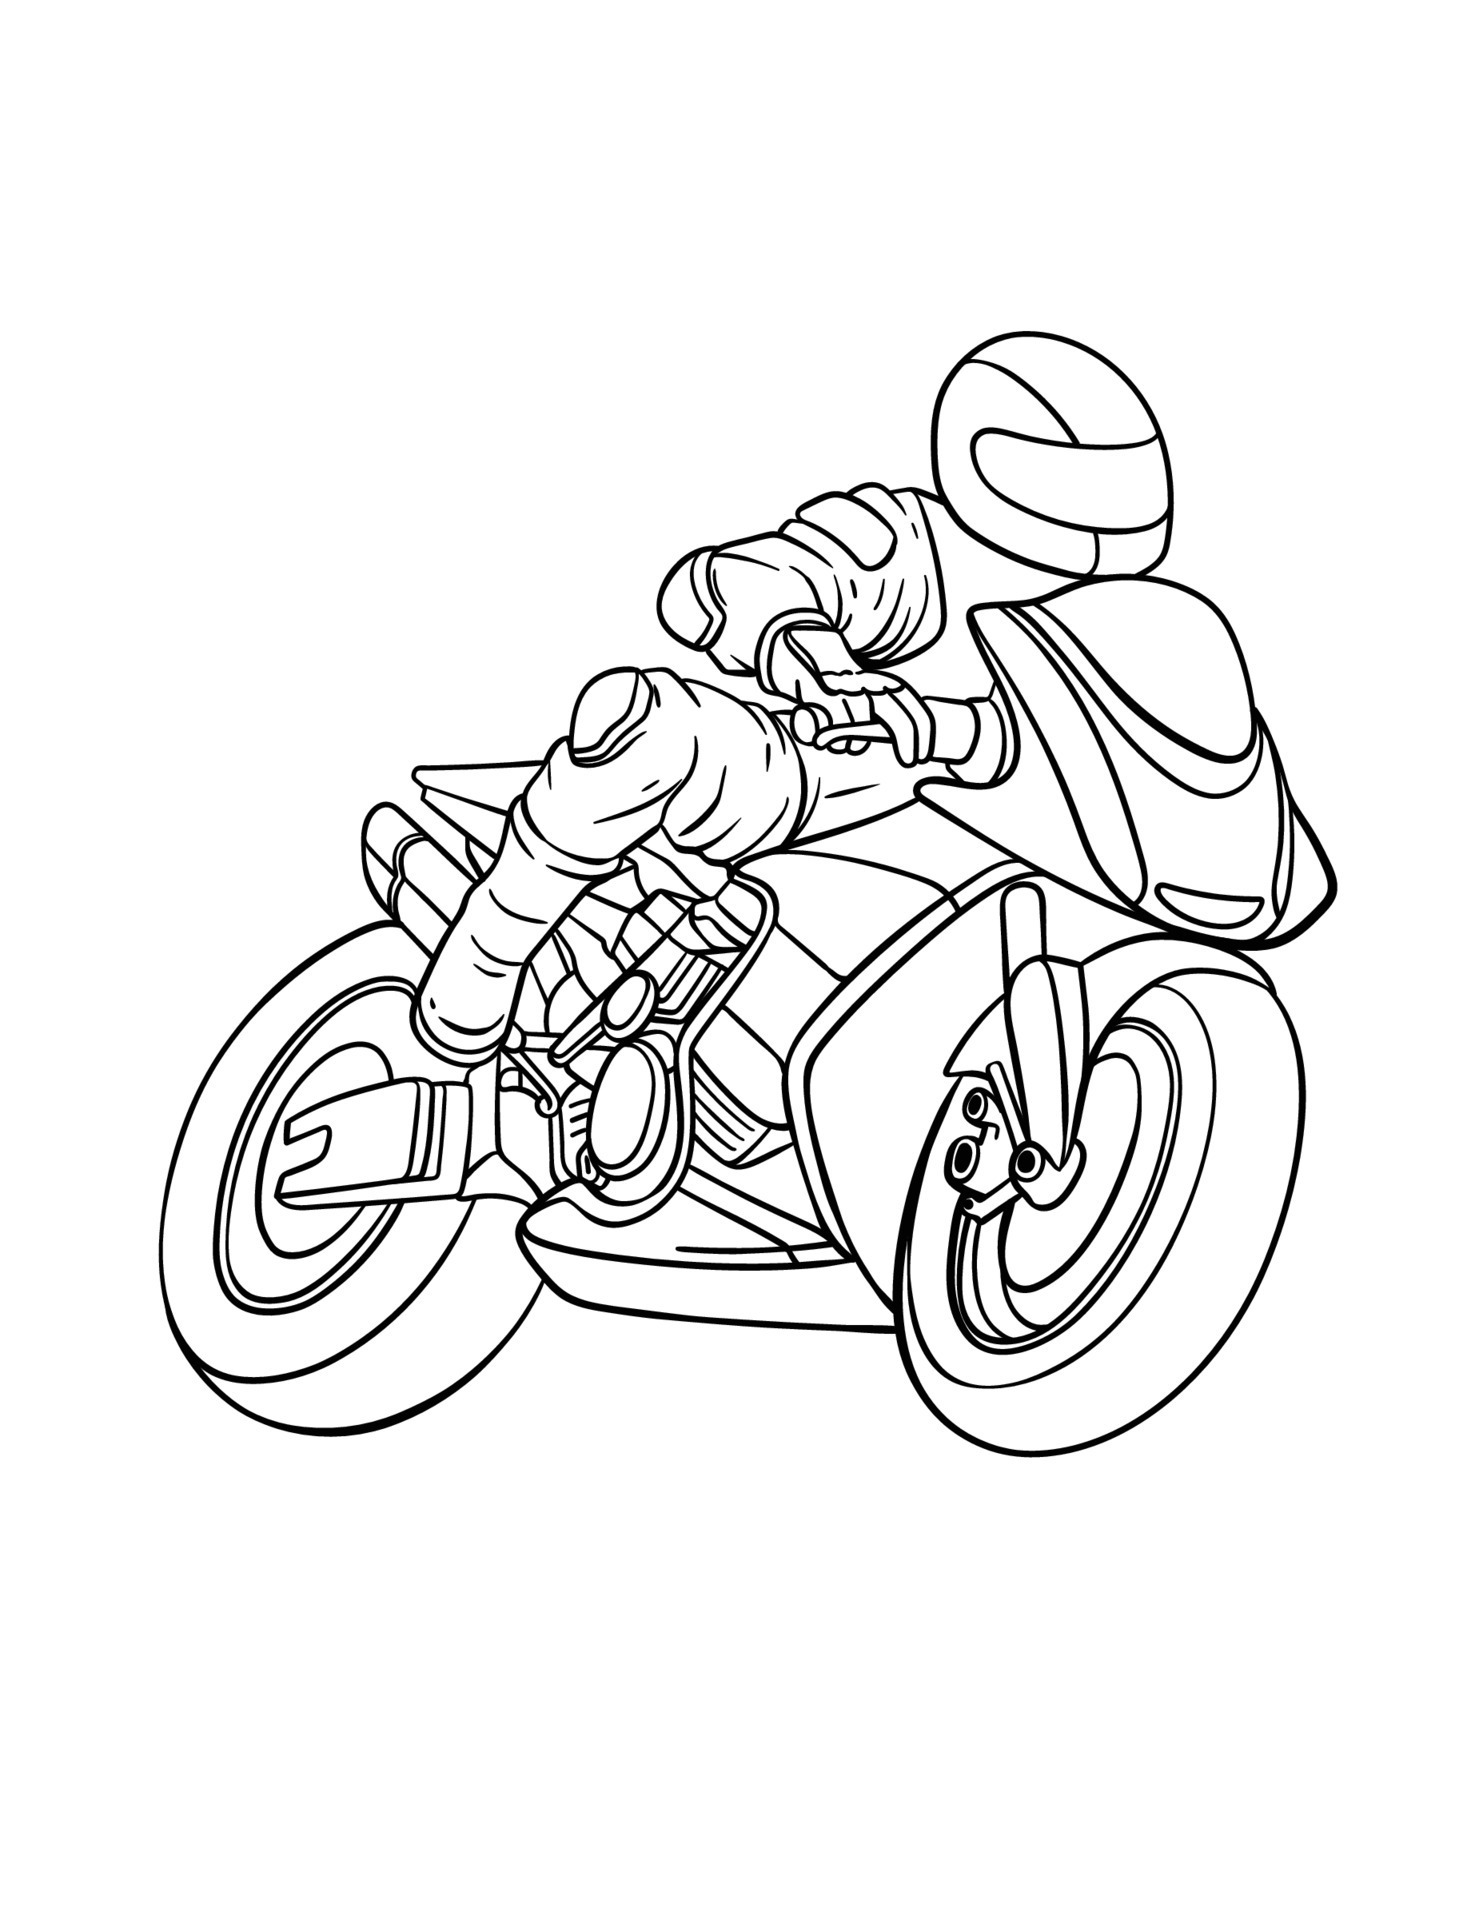 página para colorir isolada de corrida de moto para crianças 11418533 Vetor  no Vecteezy